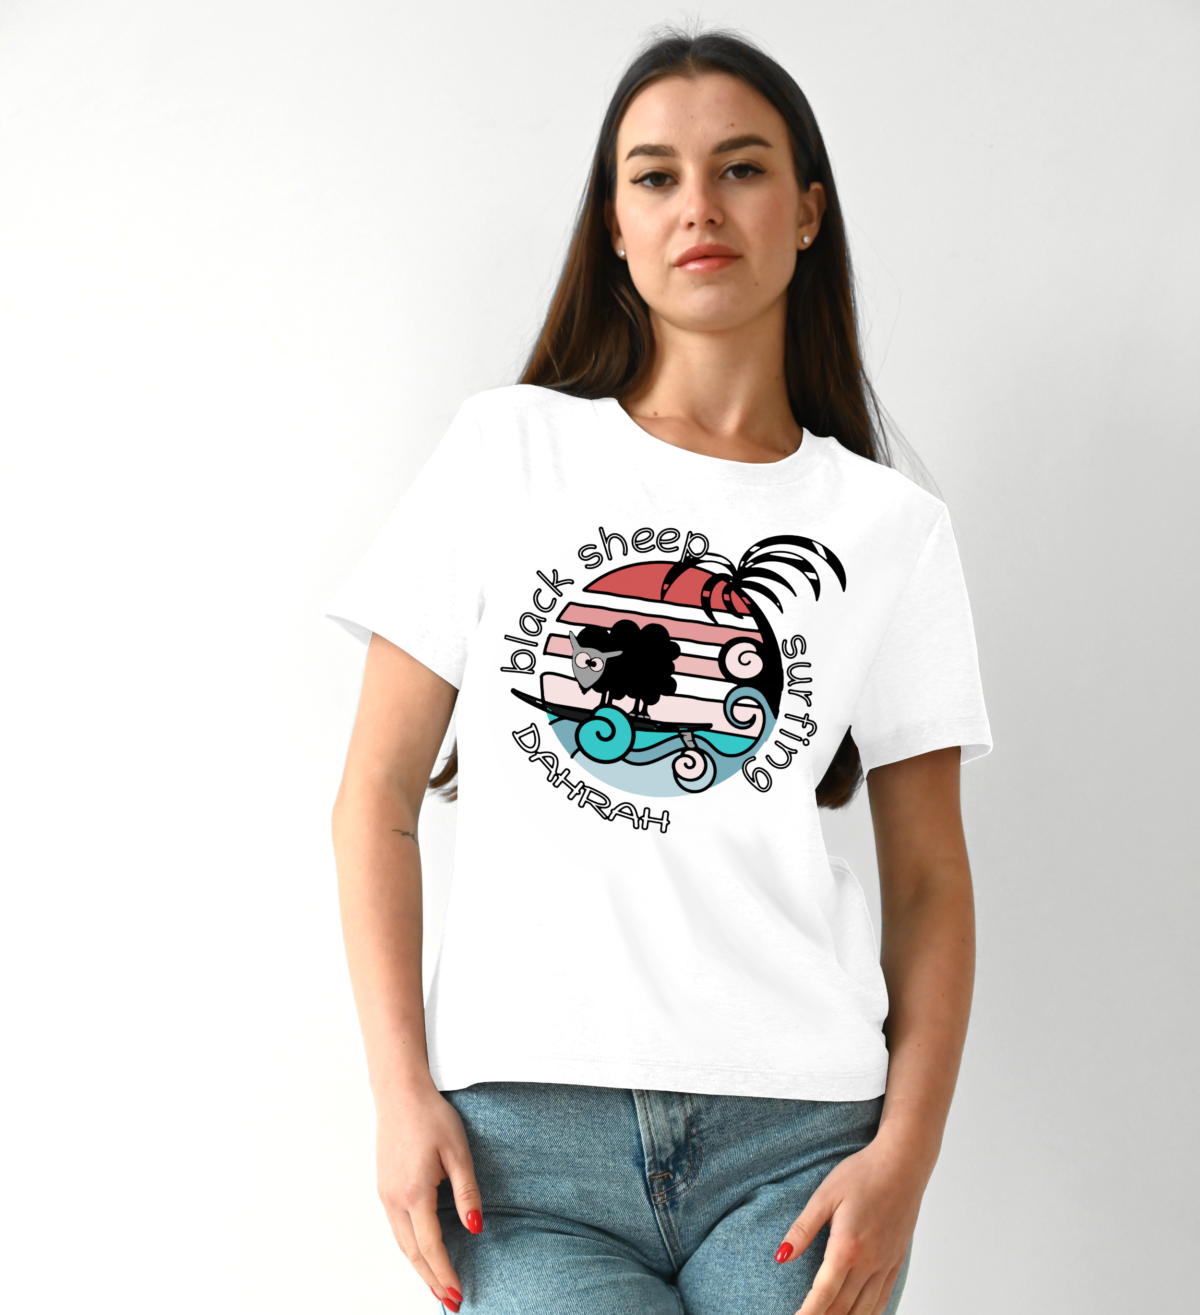 Organic cotton T-shirt with print of a black sheep surfing by Dahrah Darah.